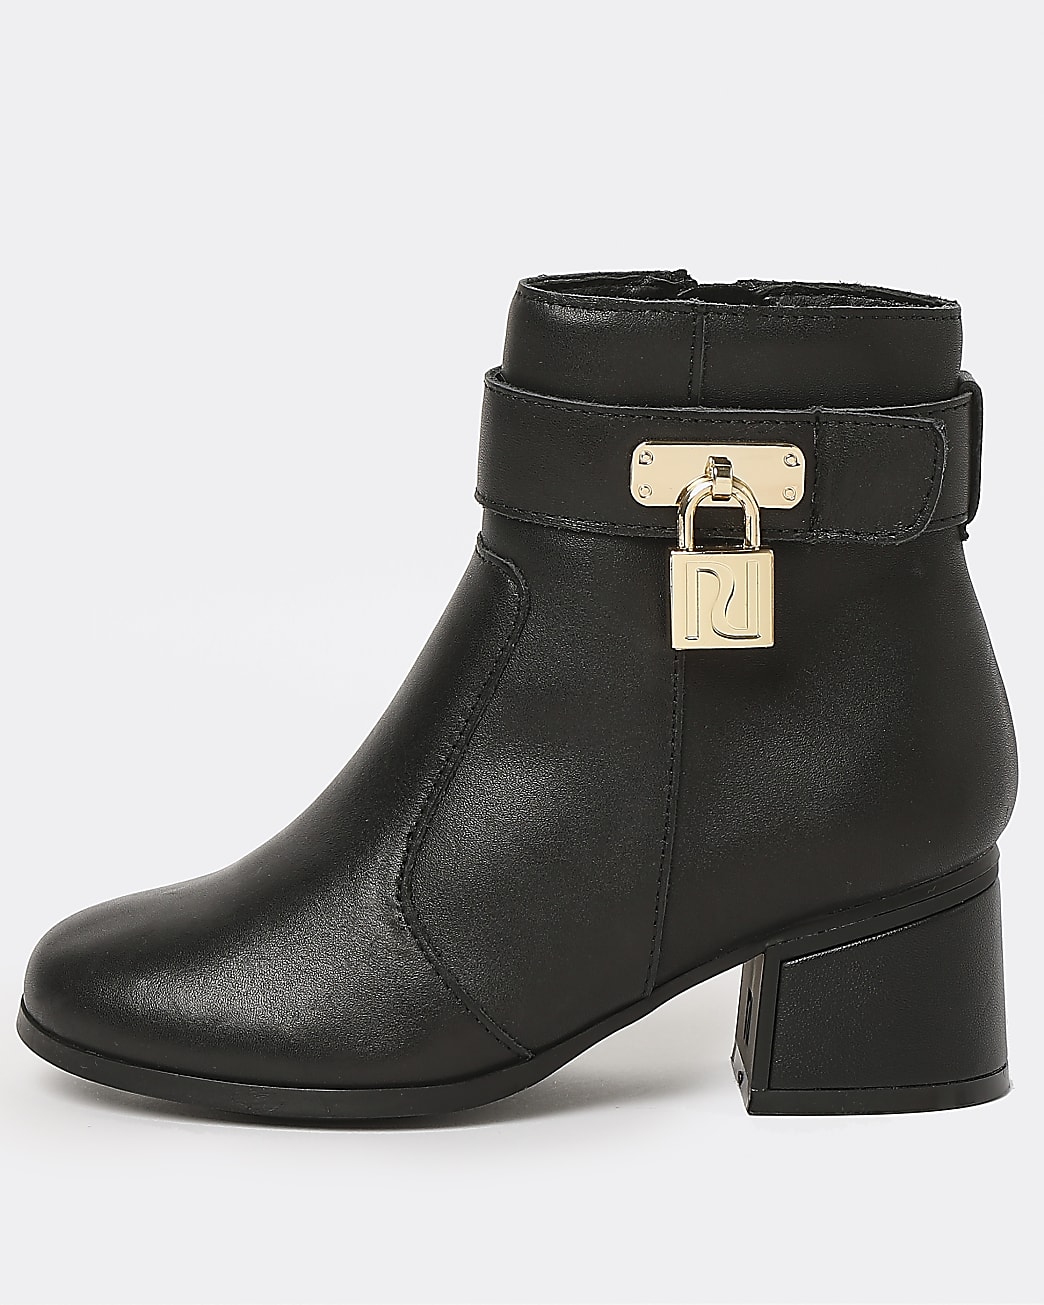 Girls black leather padlock heel boots